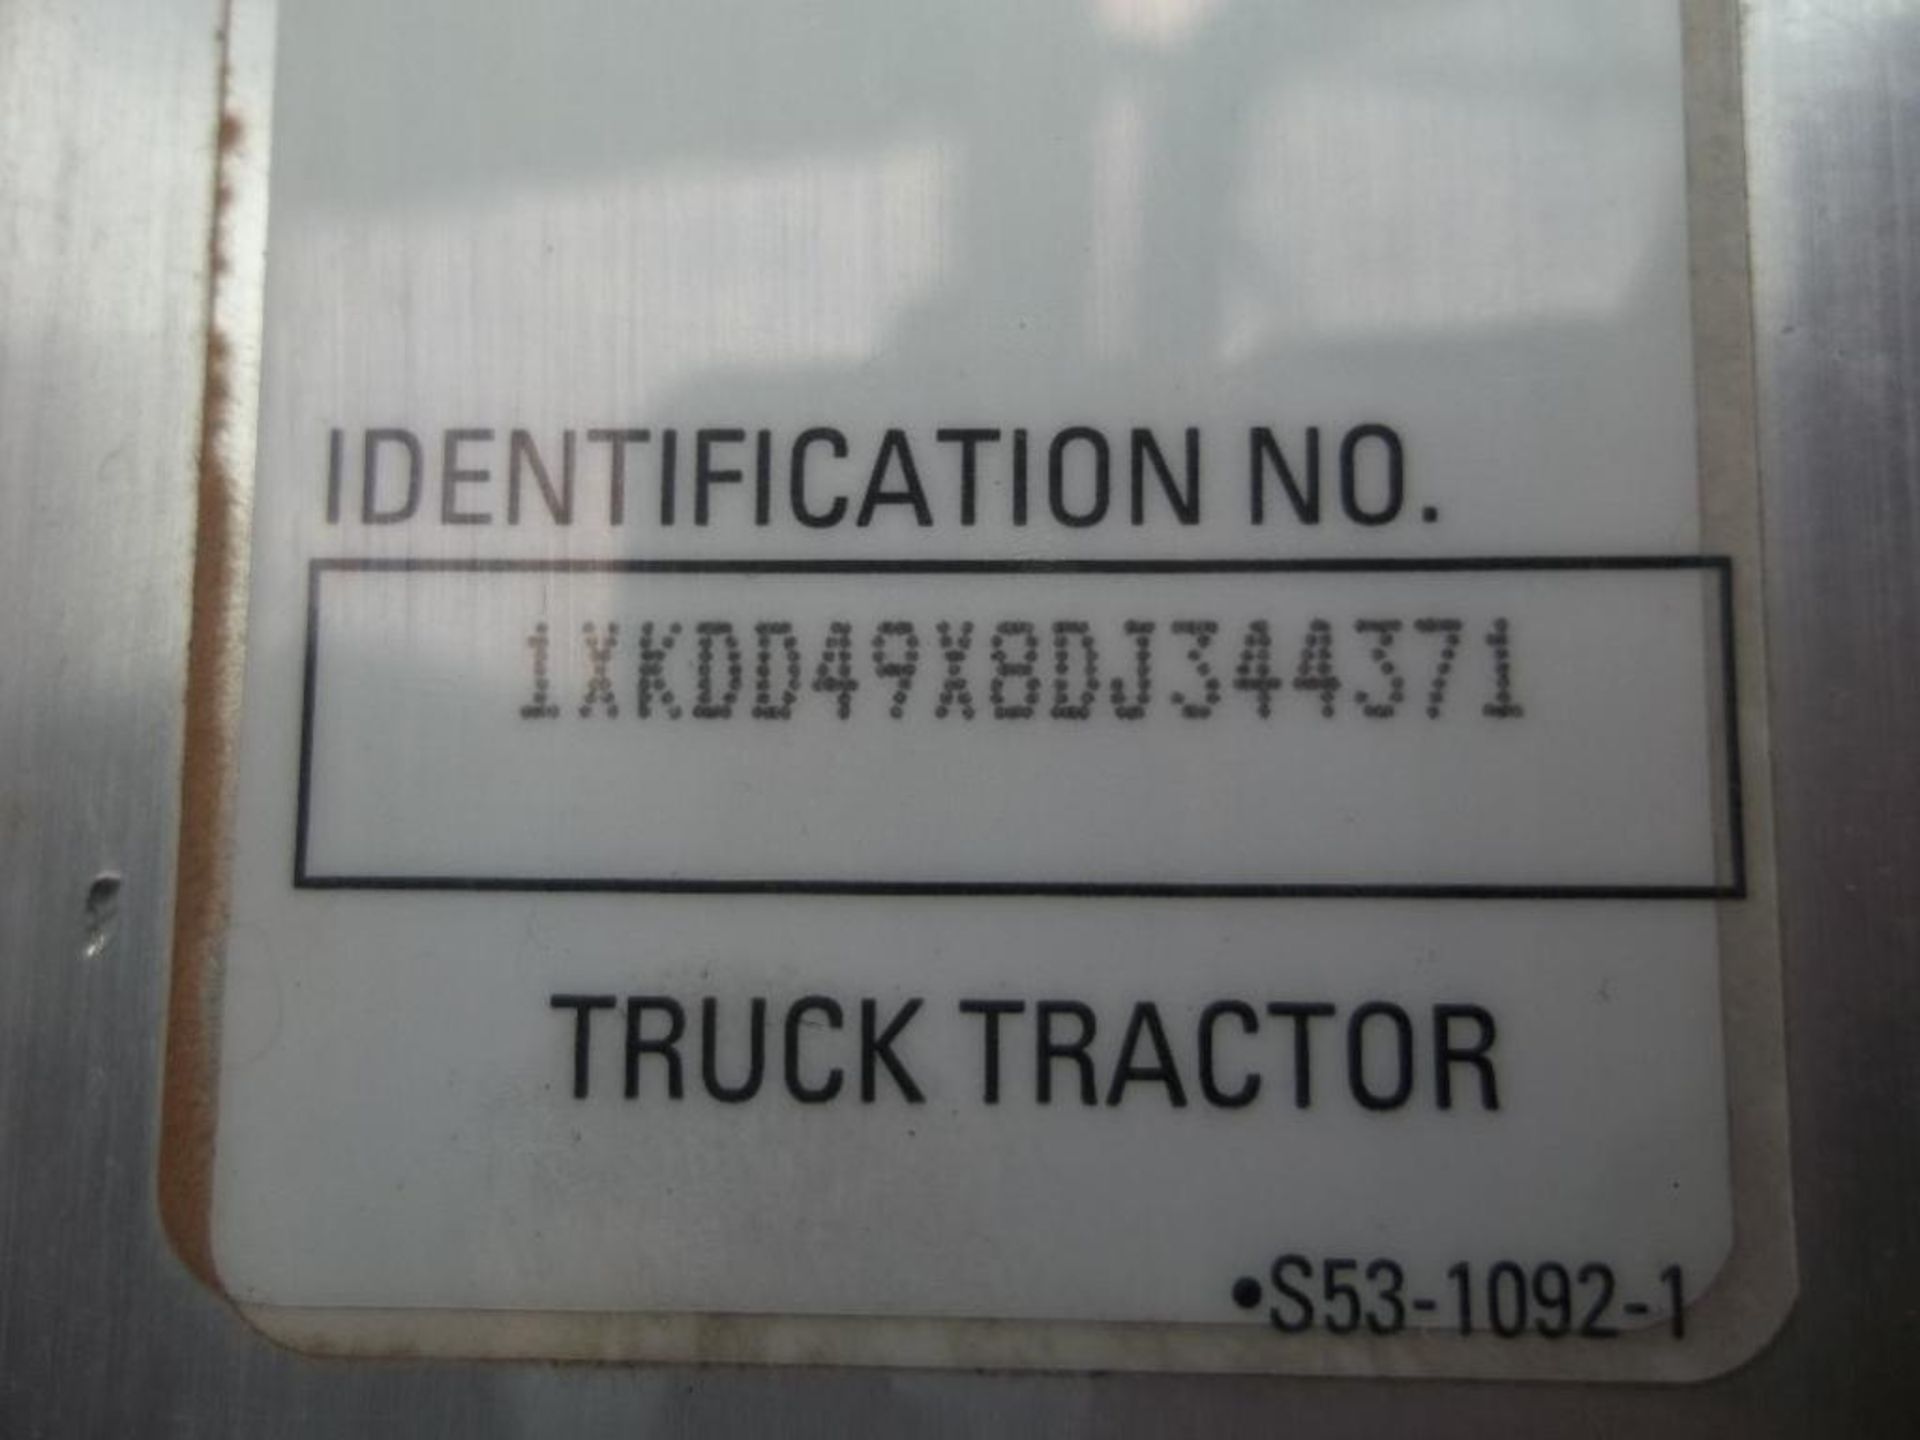 2013 Kenworth t/a Truck Tractor s/n1xkdd49xbdj344371,450 hp cummins,10 spd,147889 miles, nve - Image 5 of 6